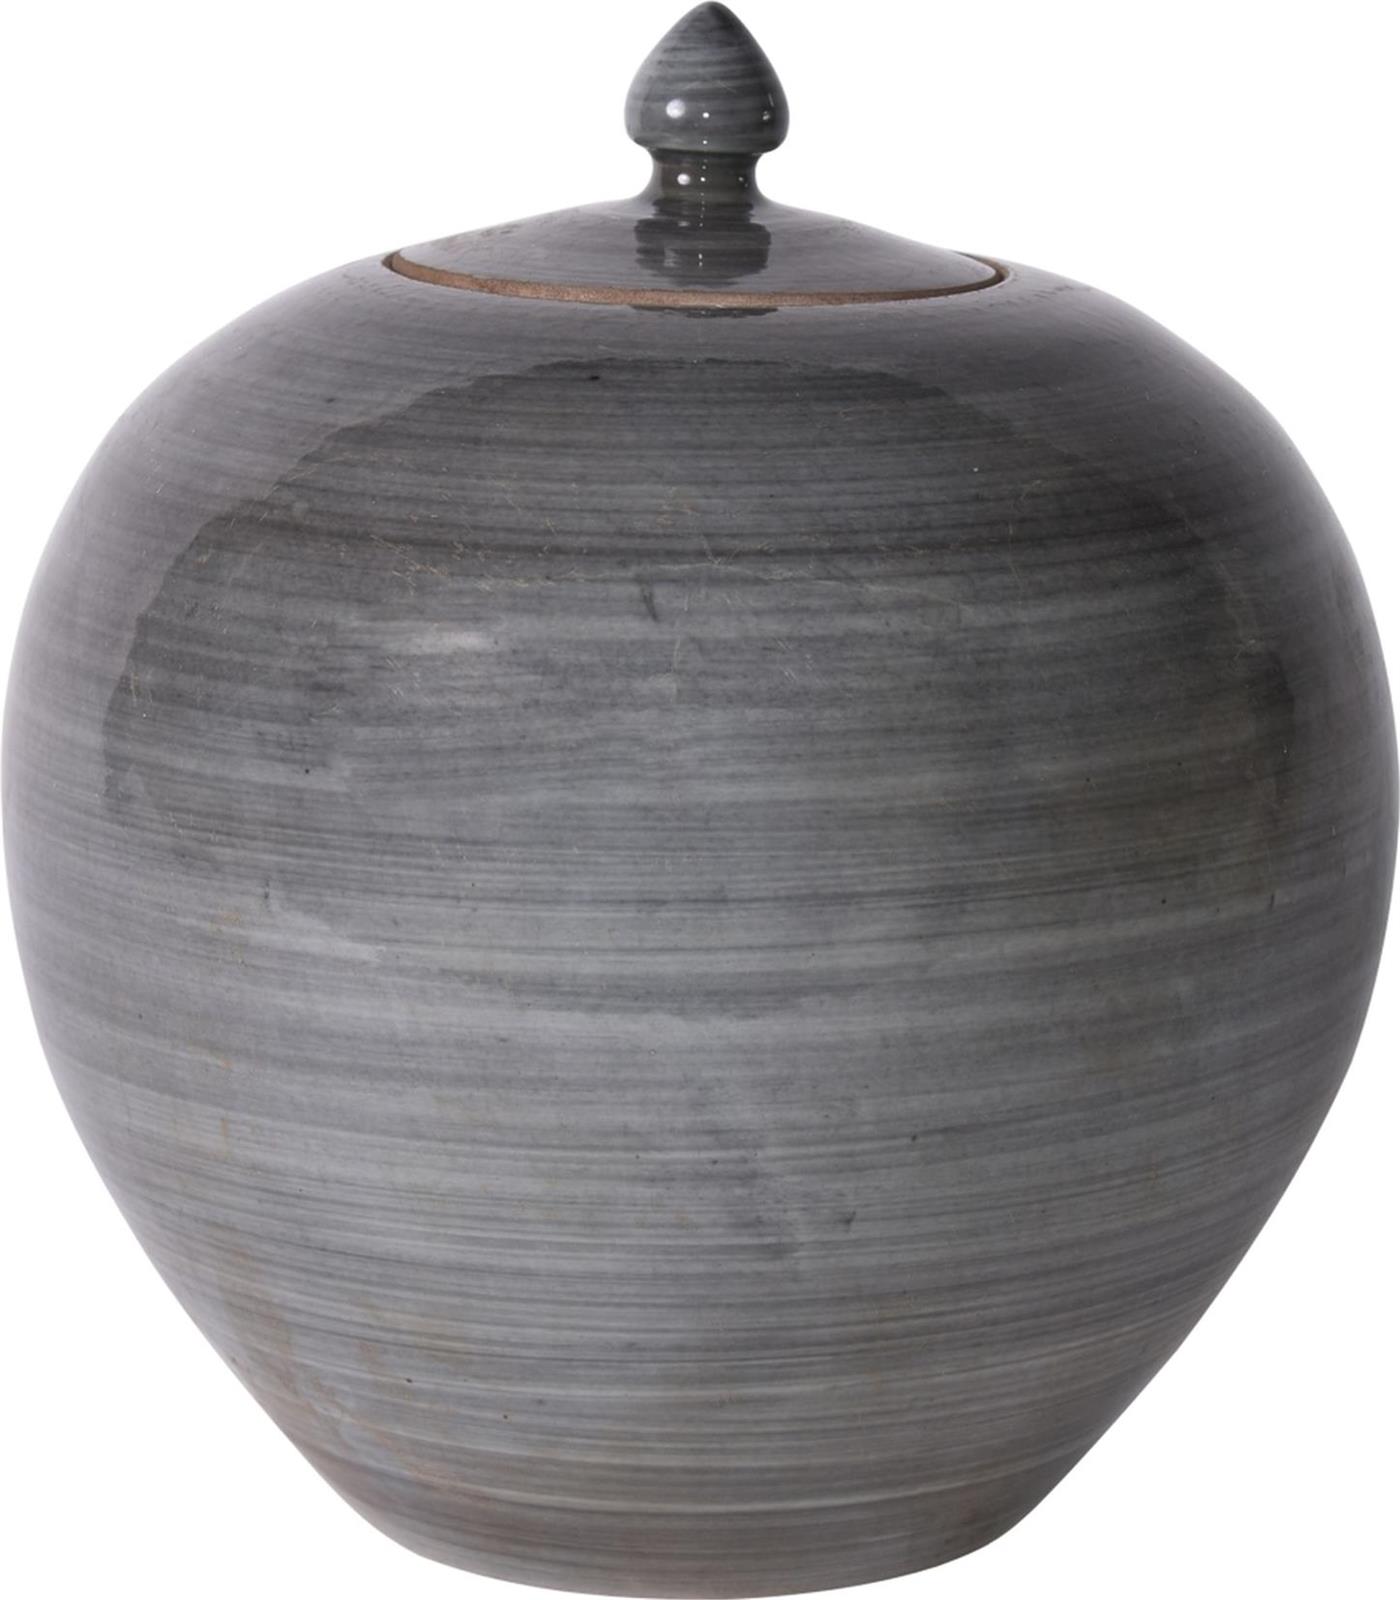 Jar Vase Melon Colors May Vary Iron Gray Variable Ceramic Handmade -Image 1